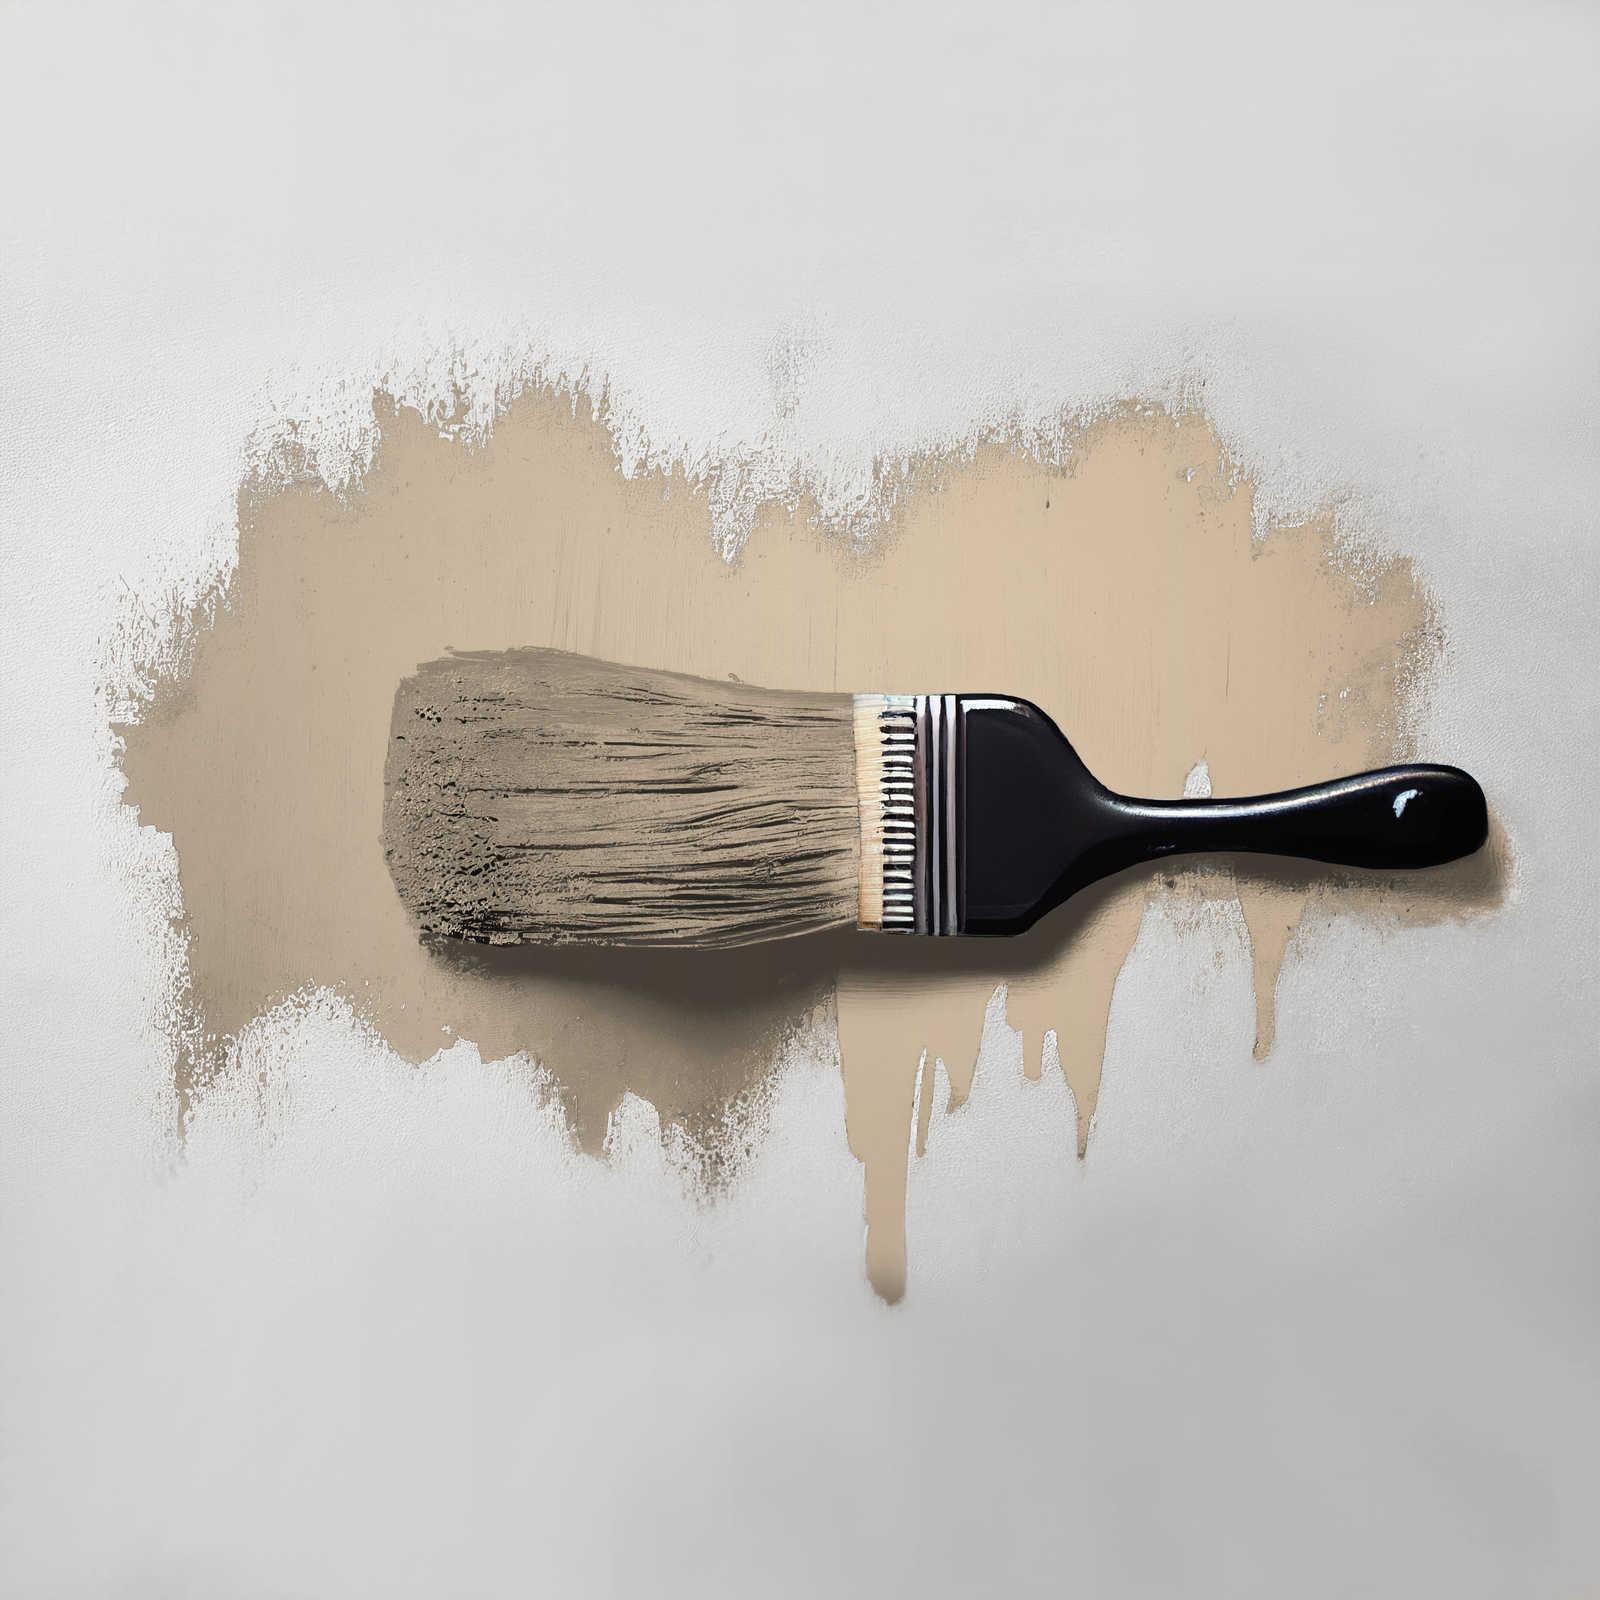             Pintura mural TCK6002 »Flat White Coffee« en beige cálido – 2,5 litro
        